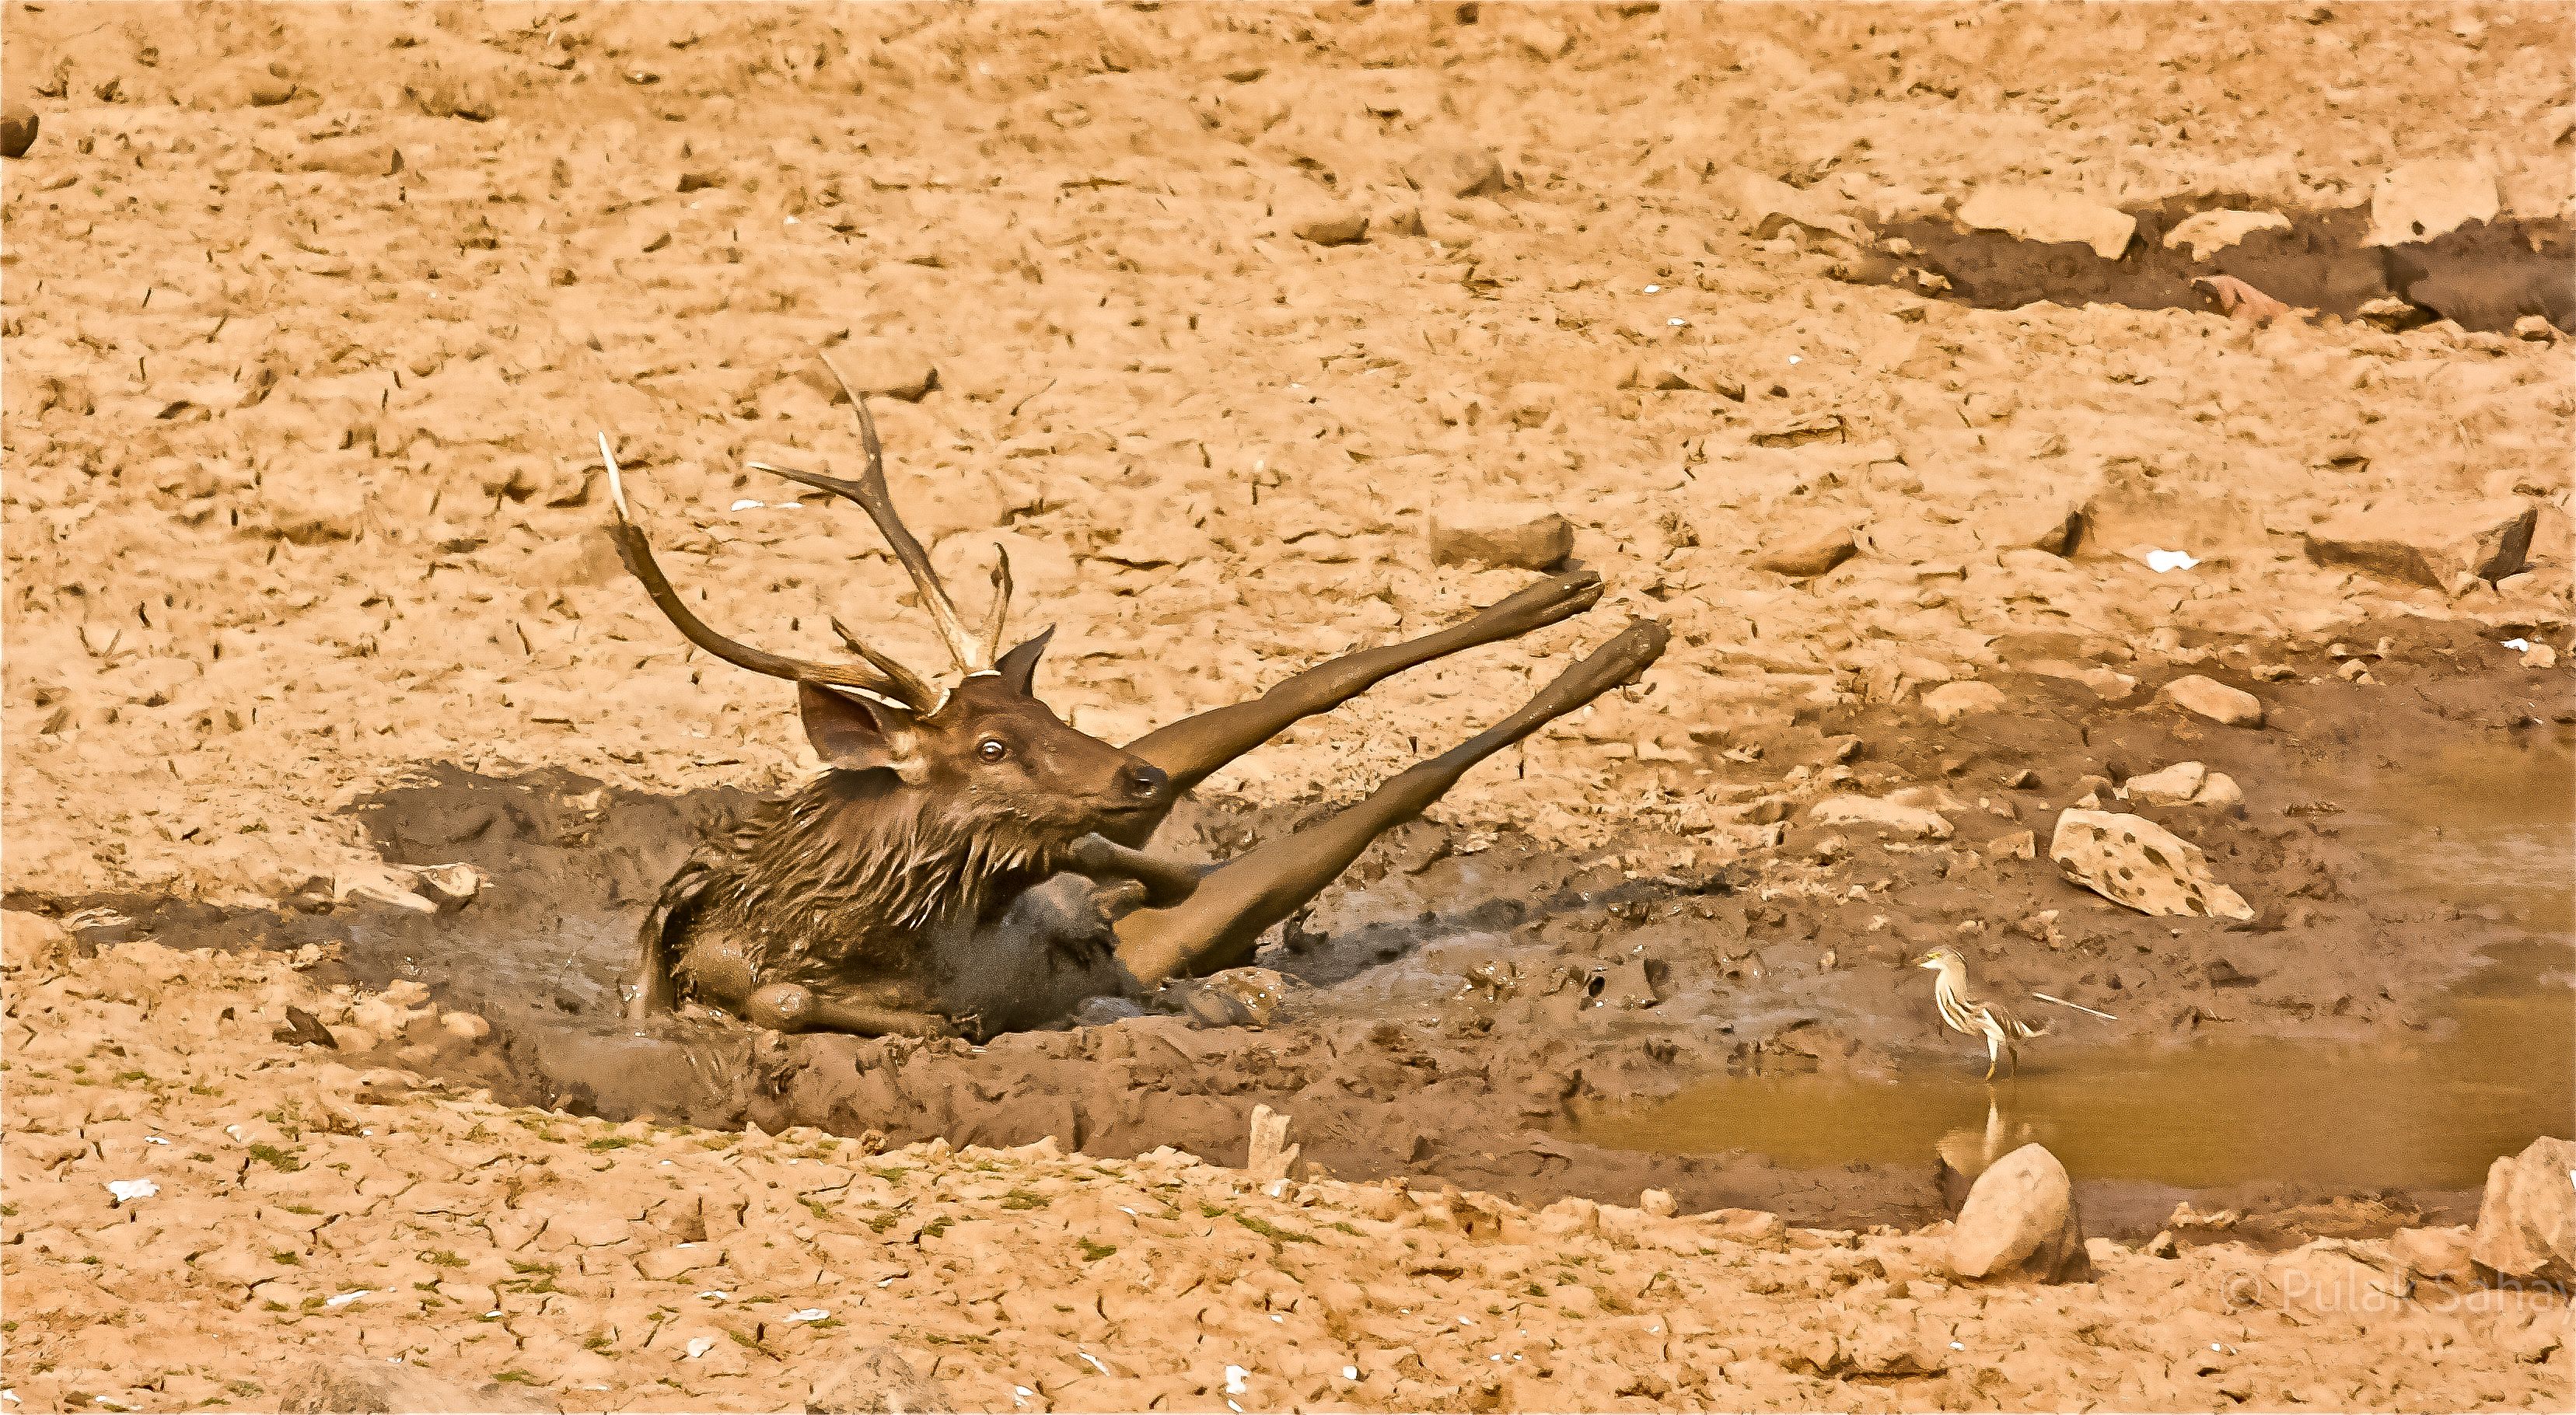 Deer having a mud bath with bird watching 